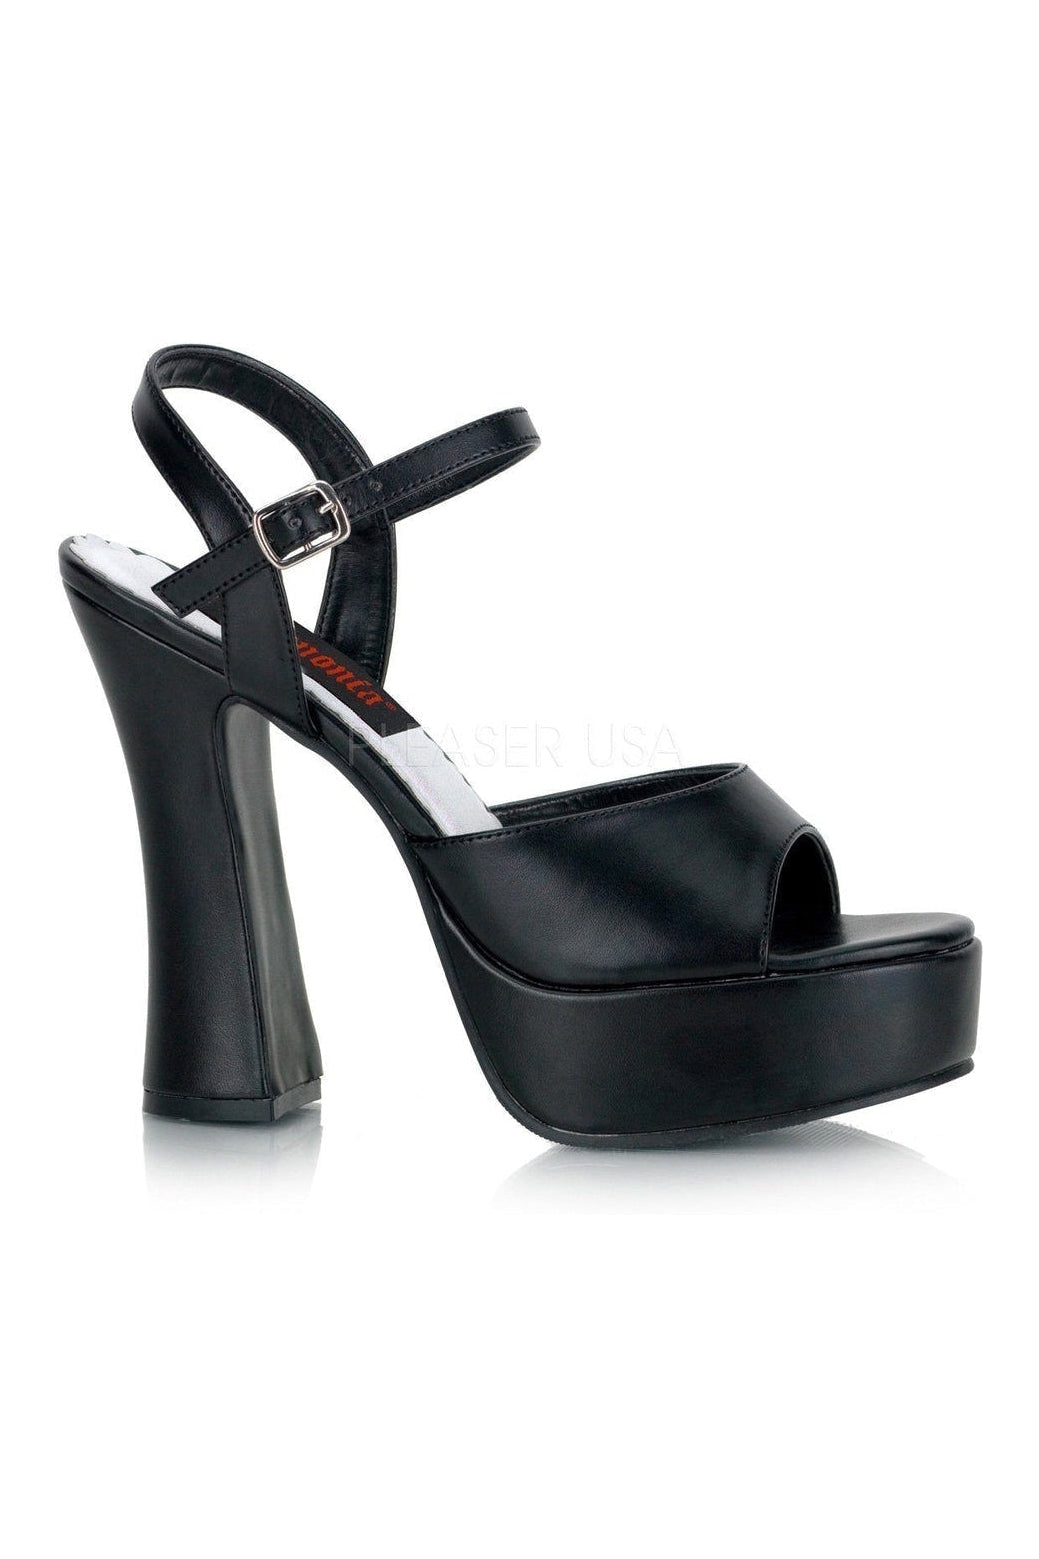 DOLLY-09 Sandal | Black Faux Leather-Demonia-Black-Sandals-SEXYSHOES.COM